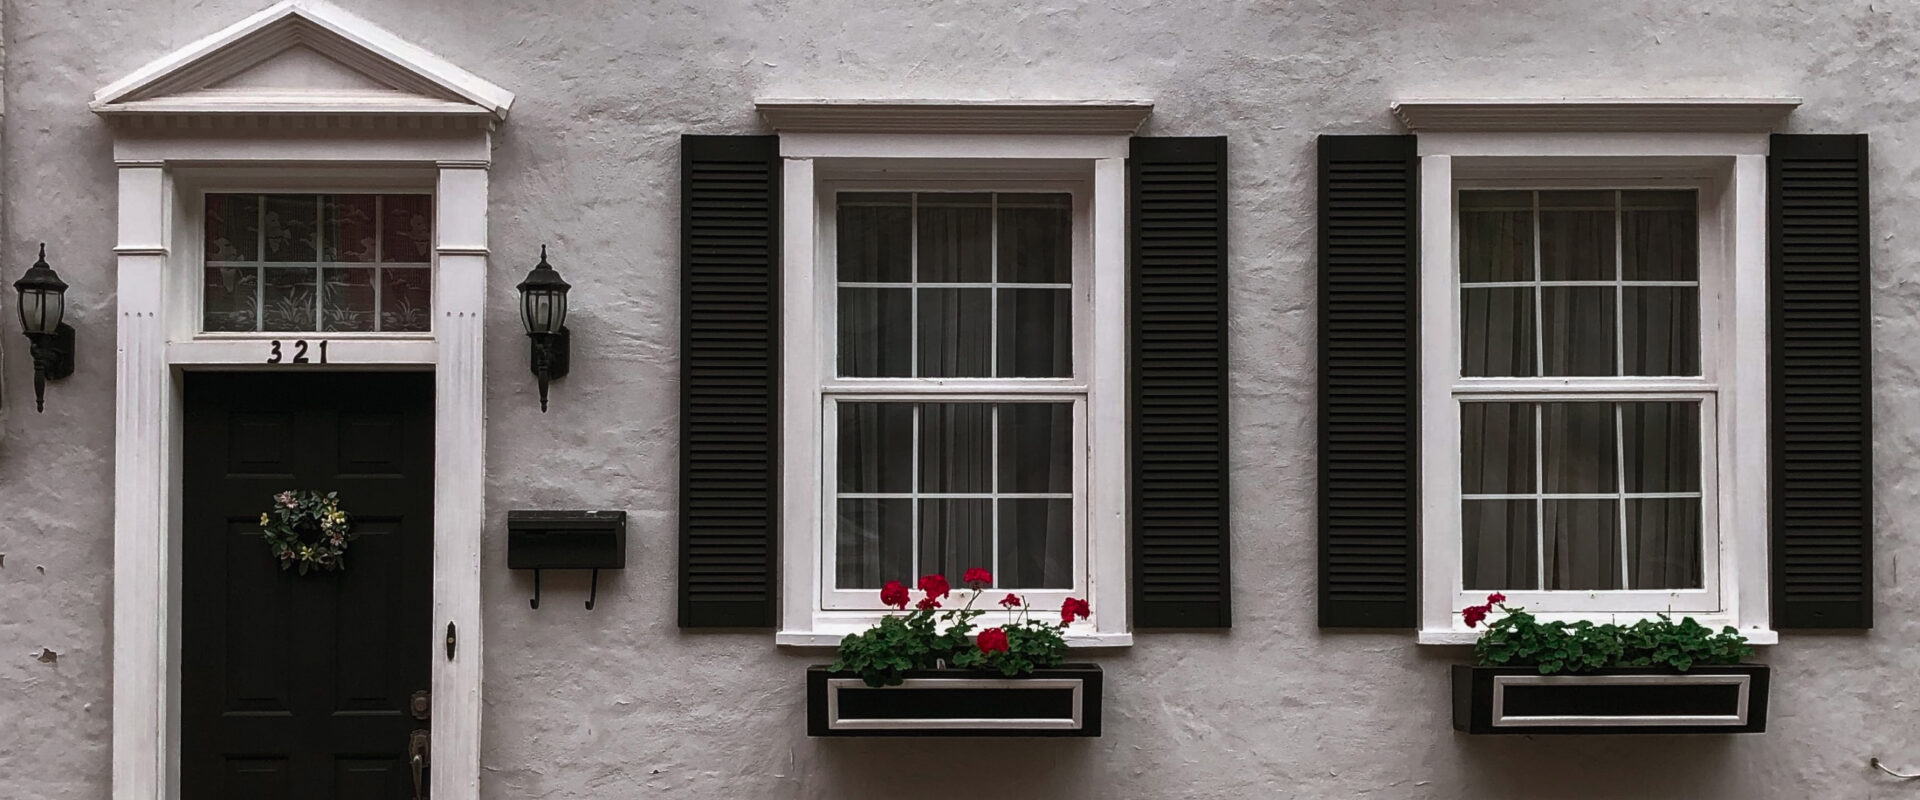 white facade of a house with black door